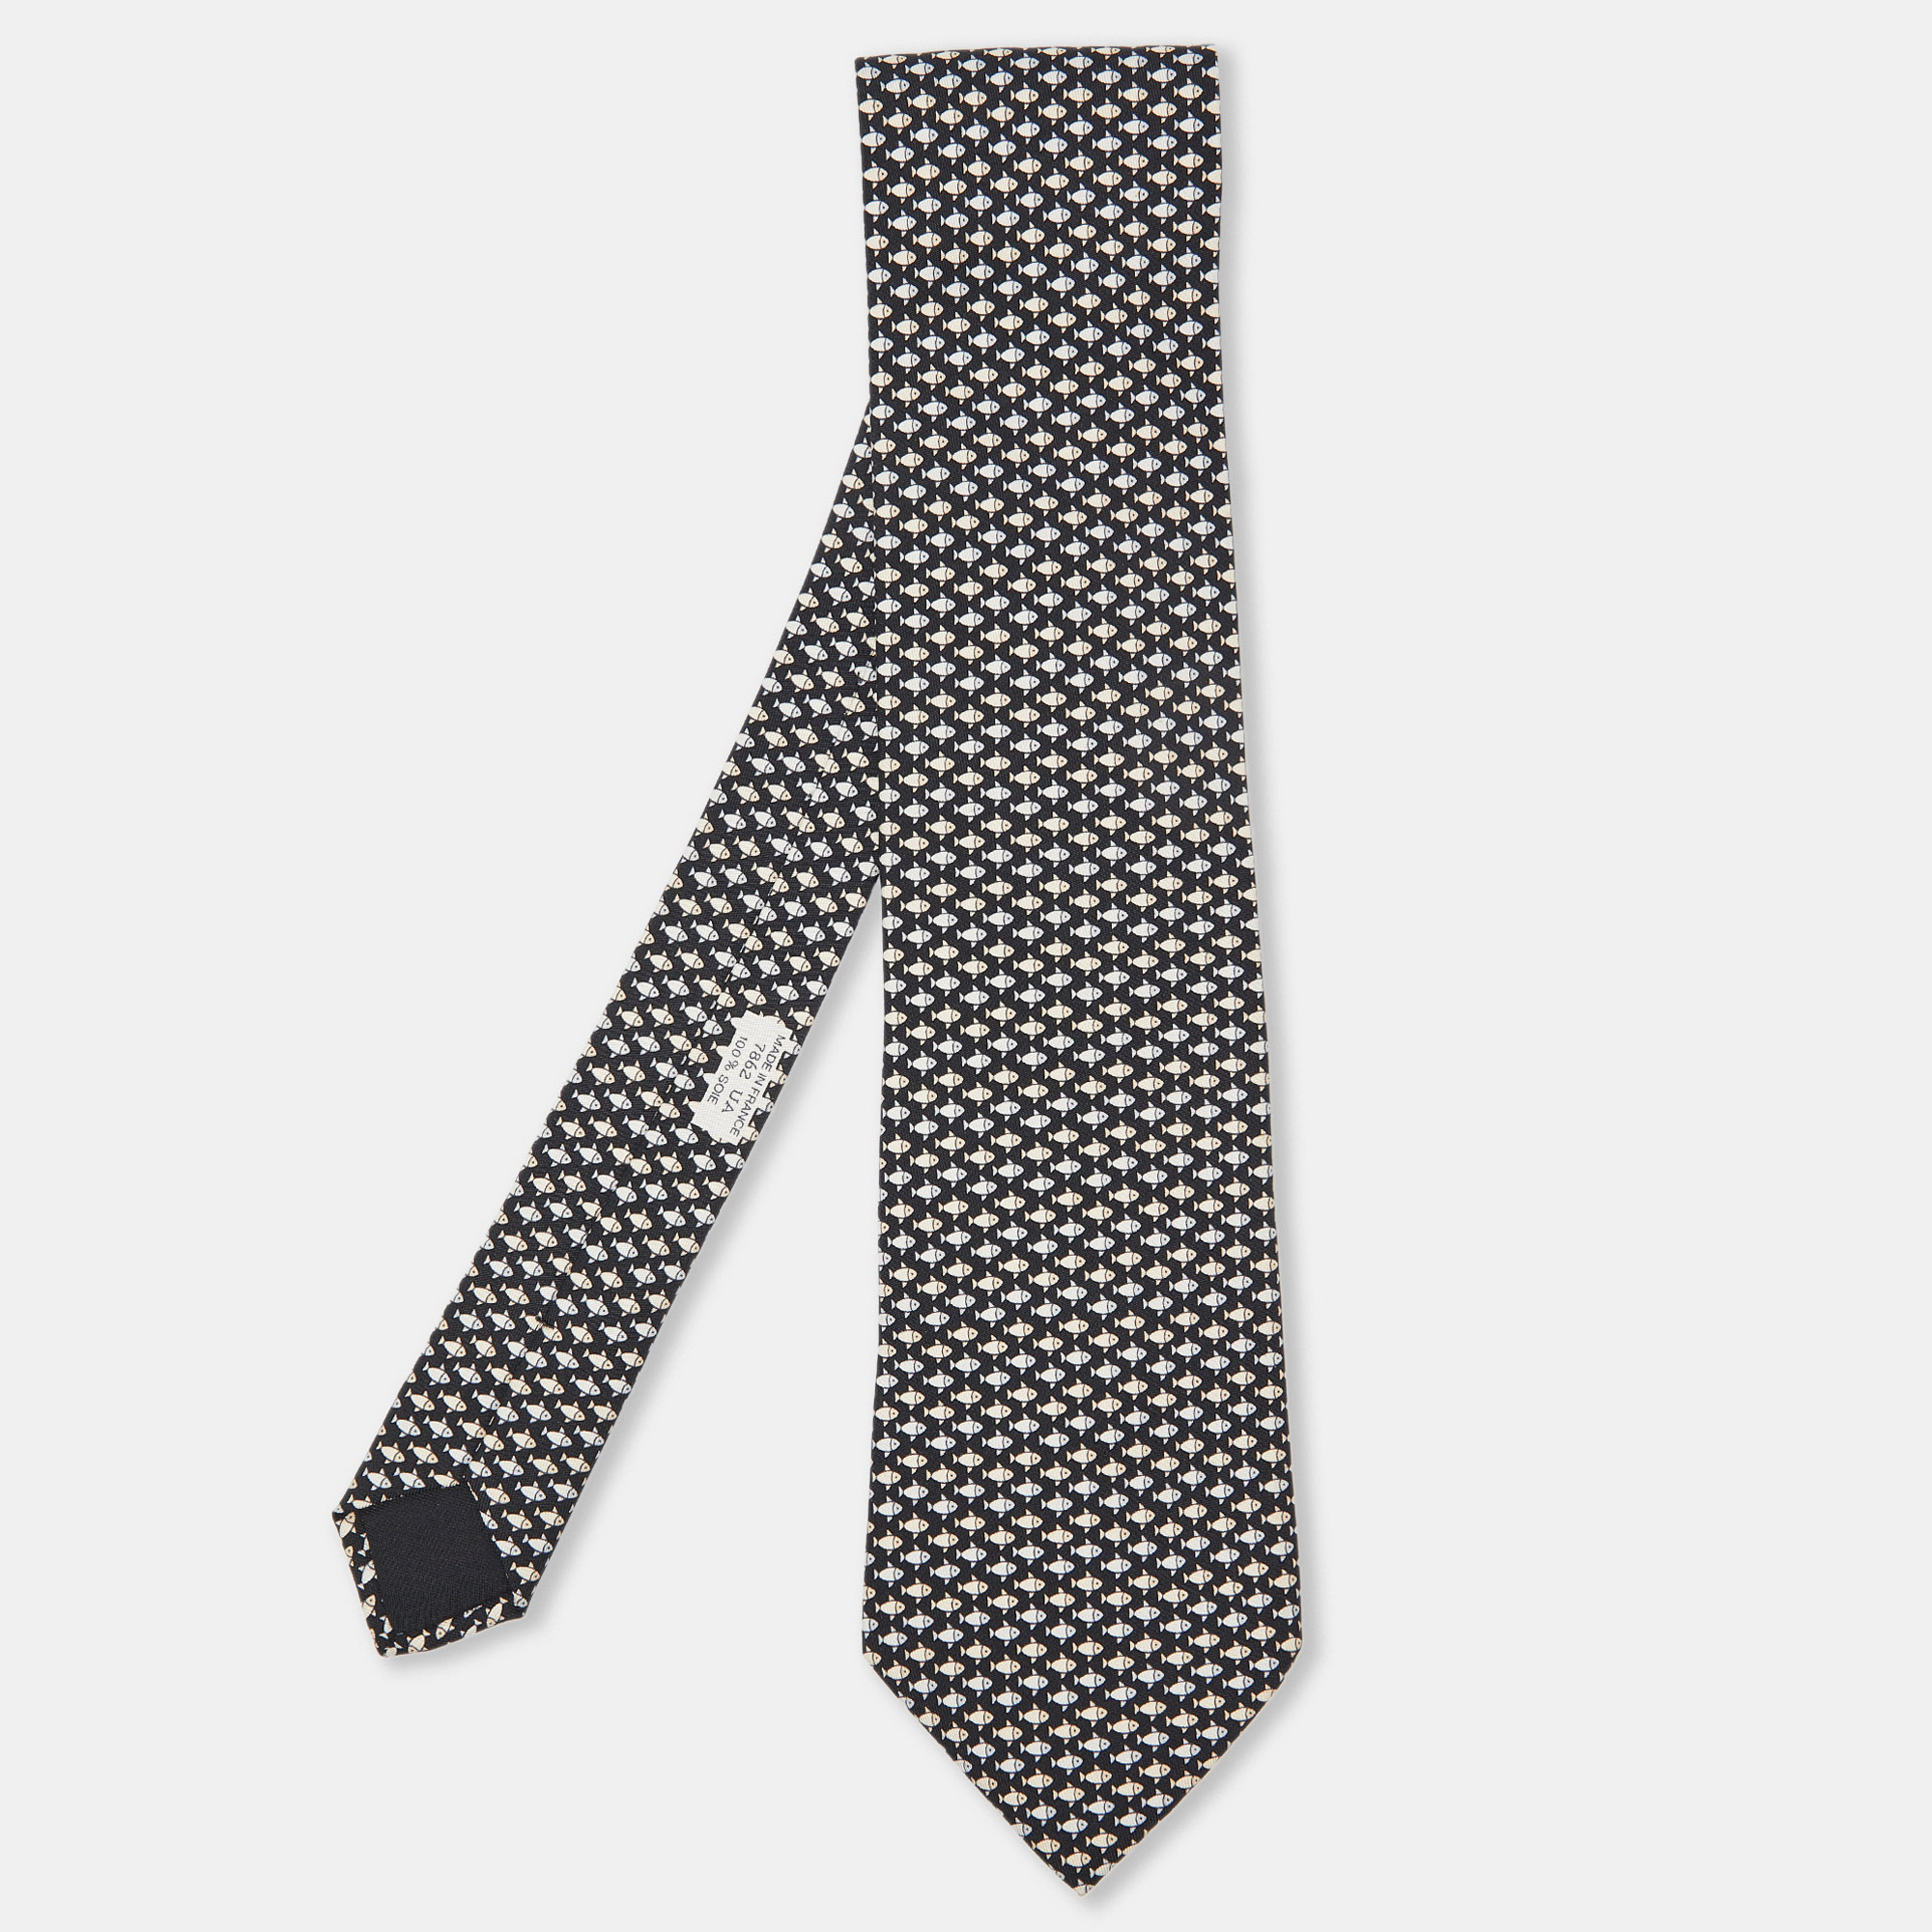 Hermes black fish print silk traditional tie